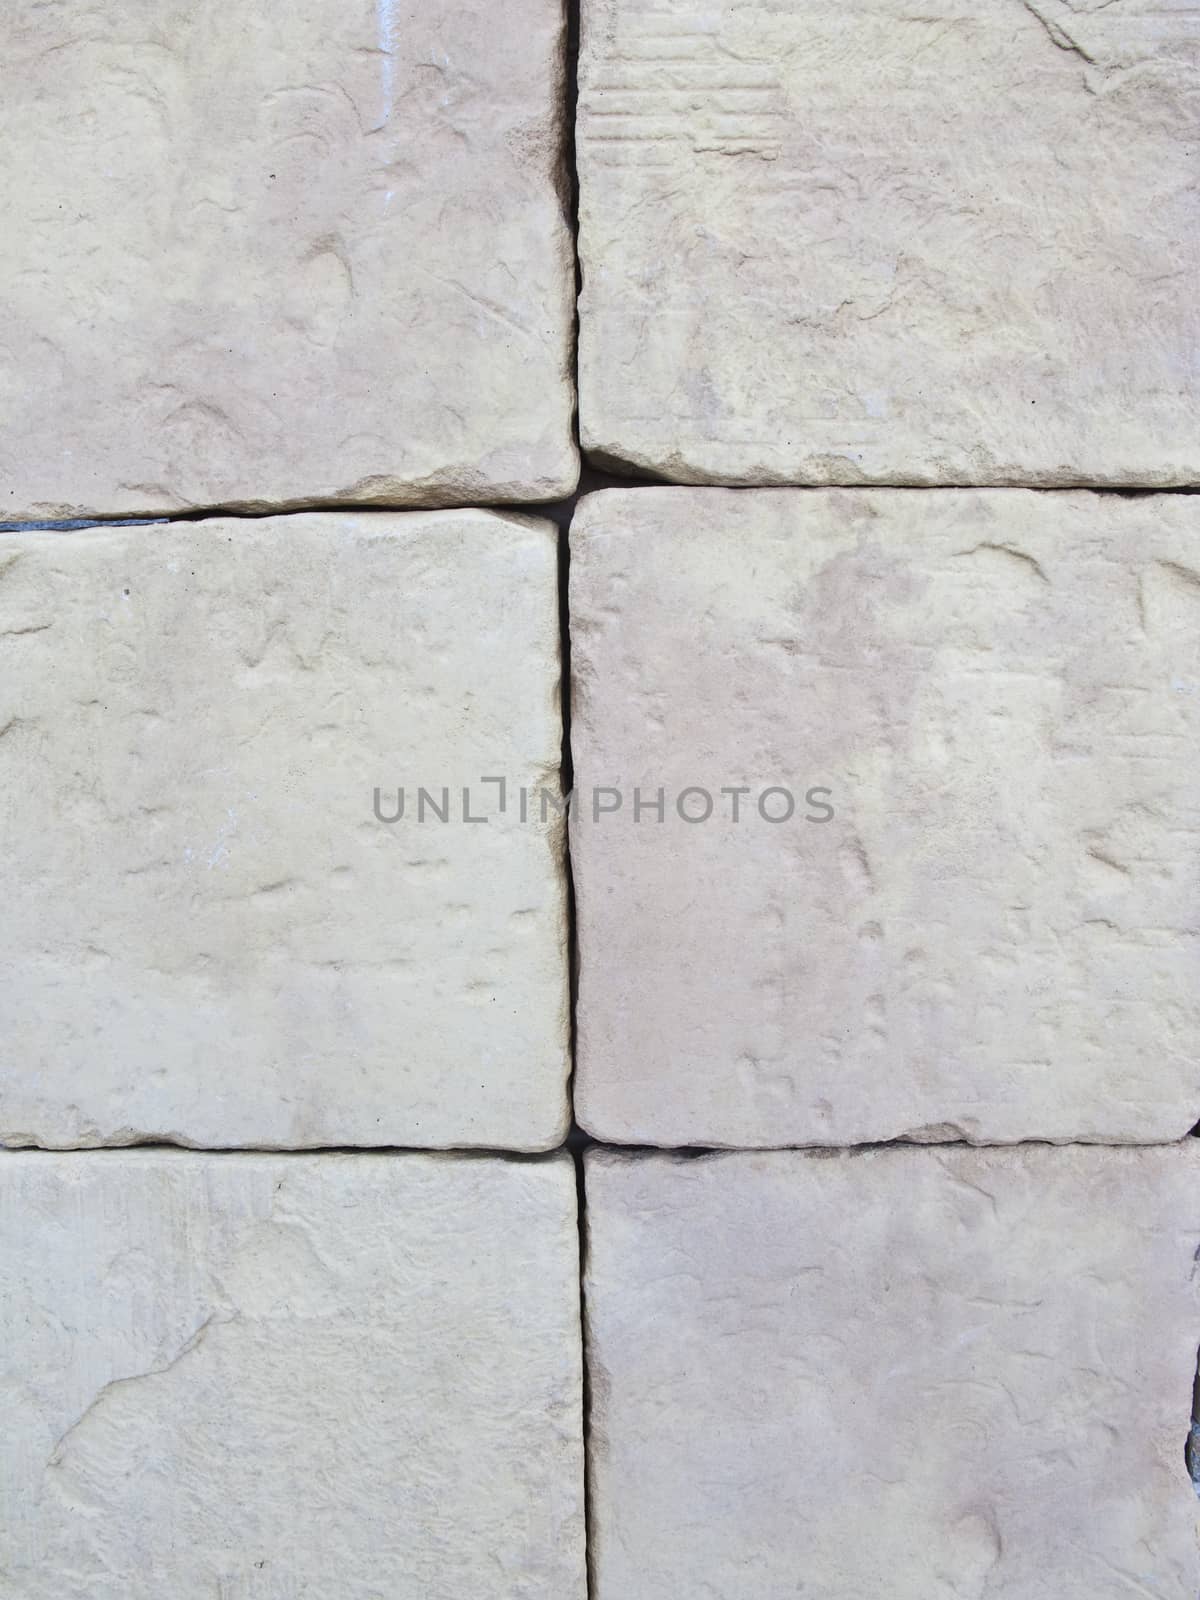 Wall texture, diverse bricks styles by FernandoCortes